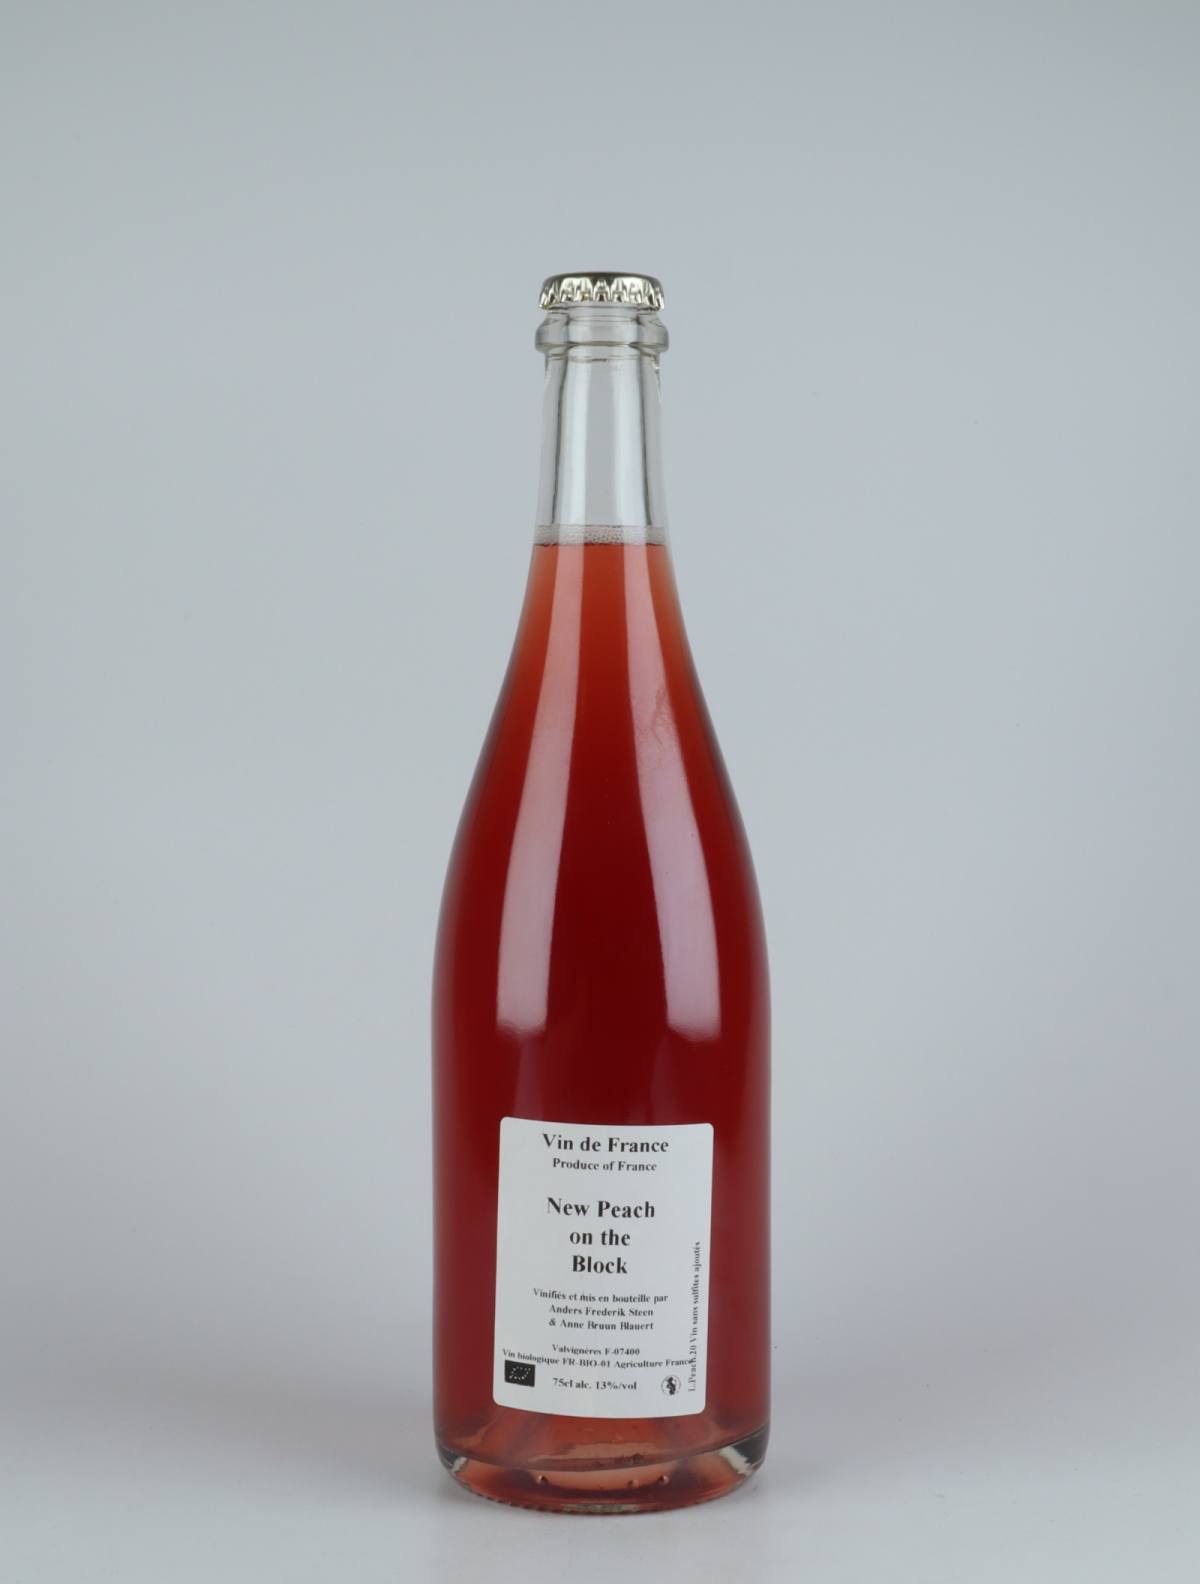 En flaske 2020 New Peach on the Block Rosé fra Anders Frederik Steen & Anne Bruun Blauert, Ardèche i Frankrig